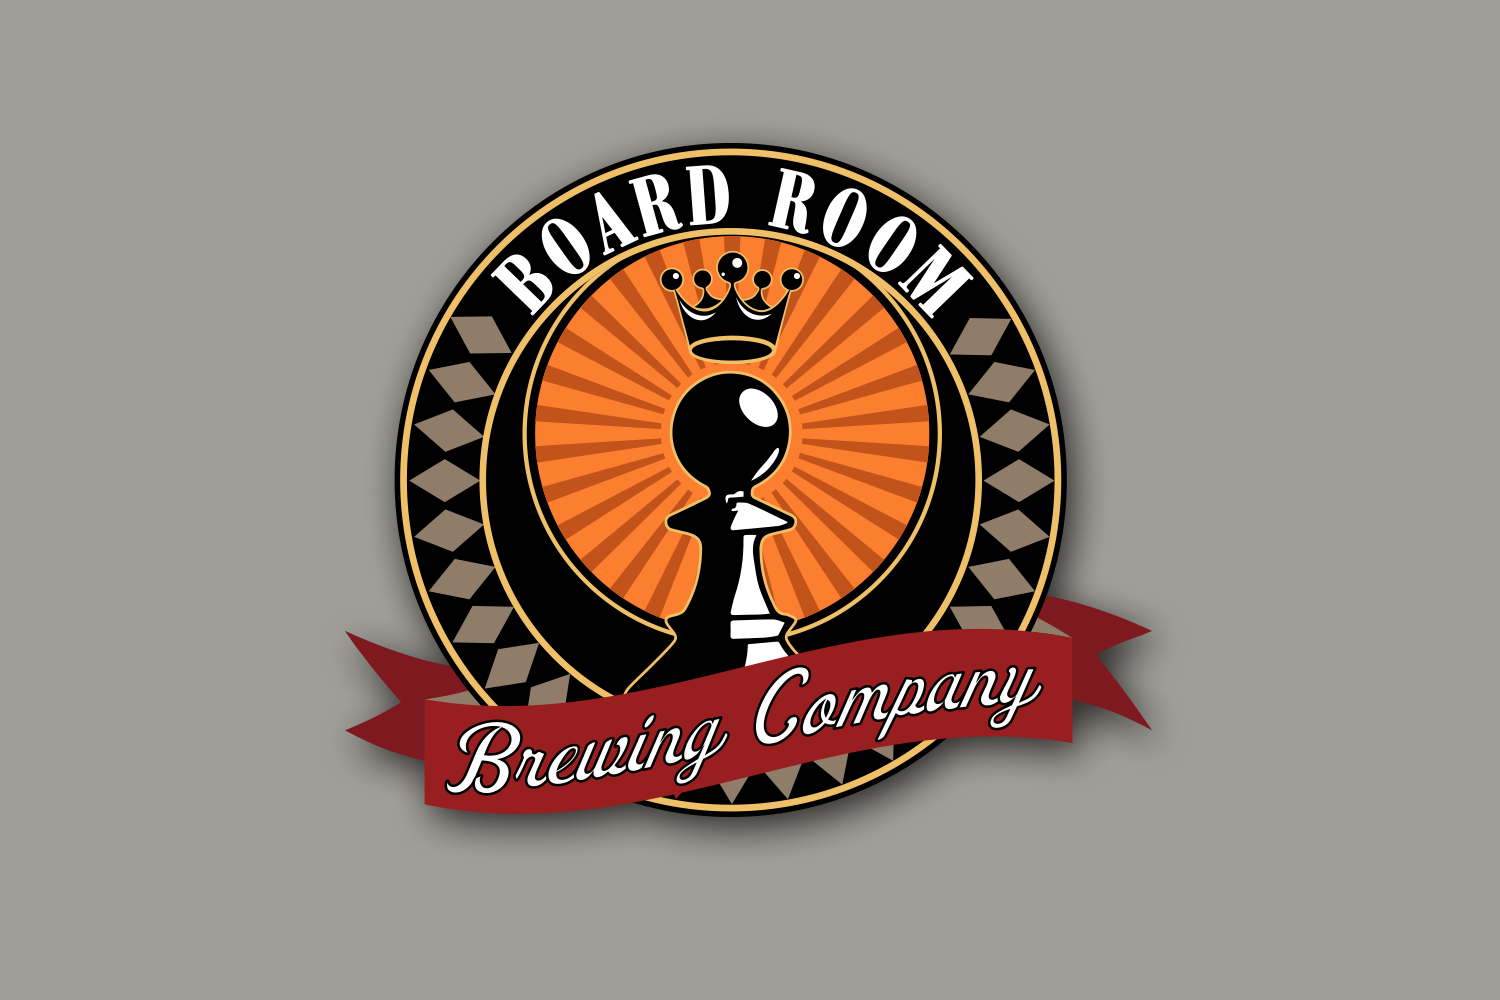 Board Room Brewing Company